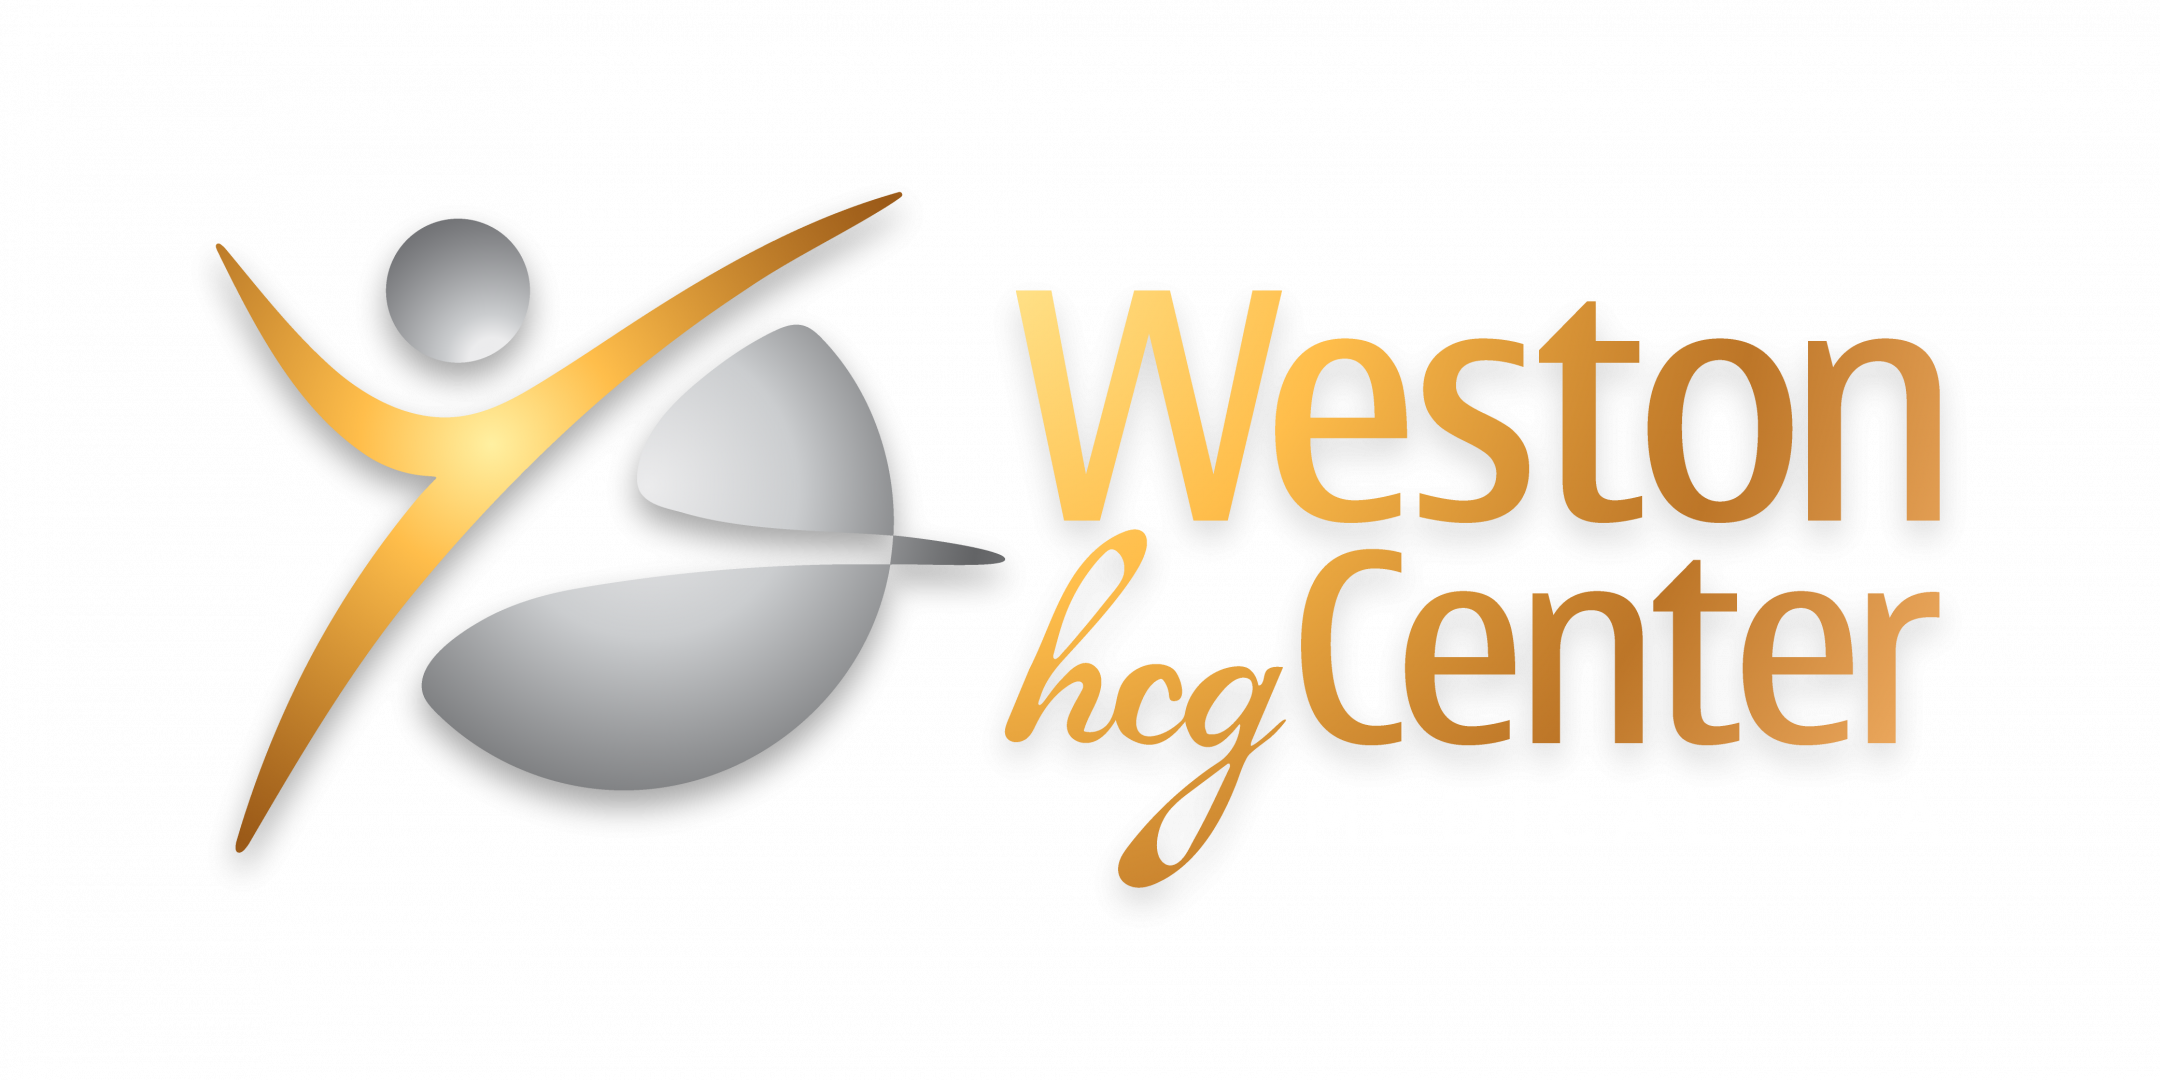 Weston HCG Center